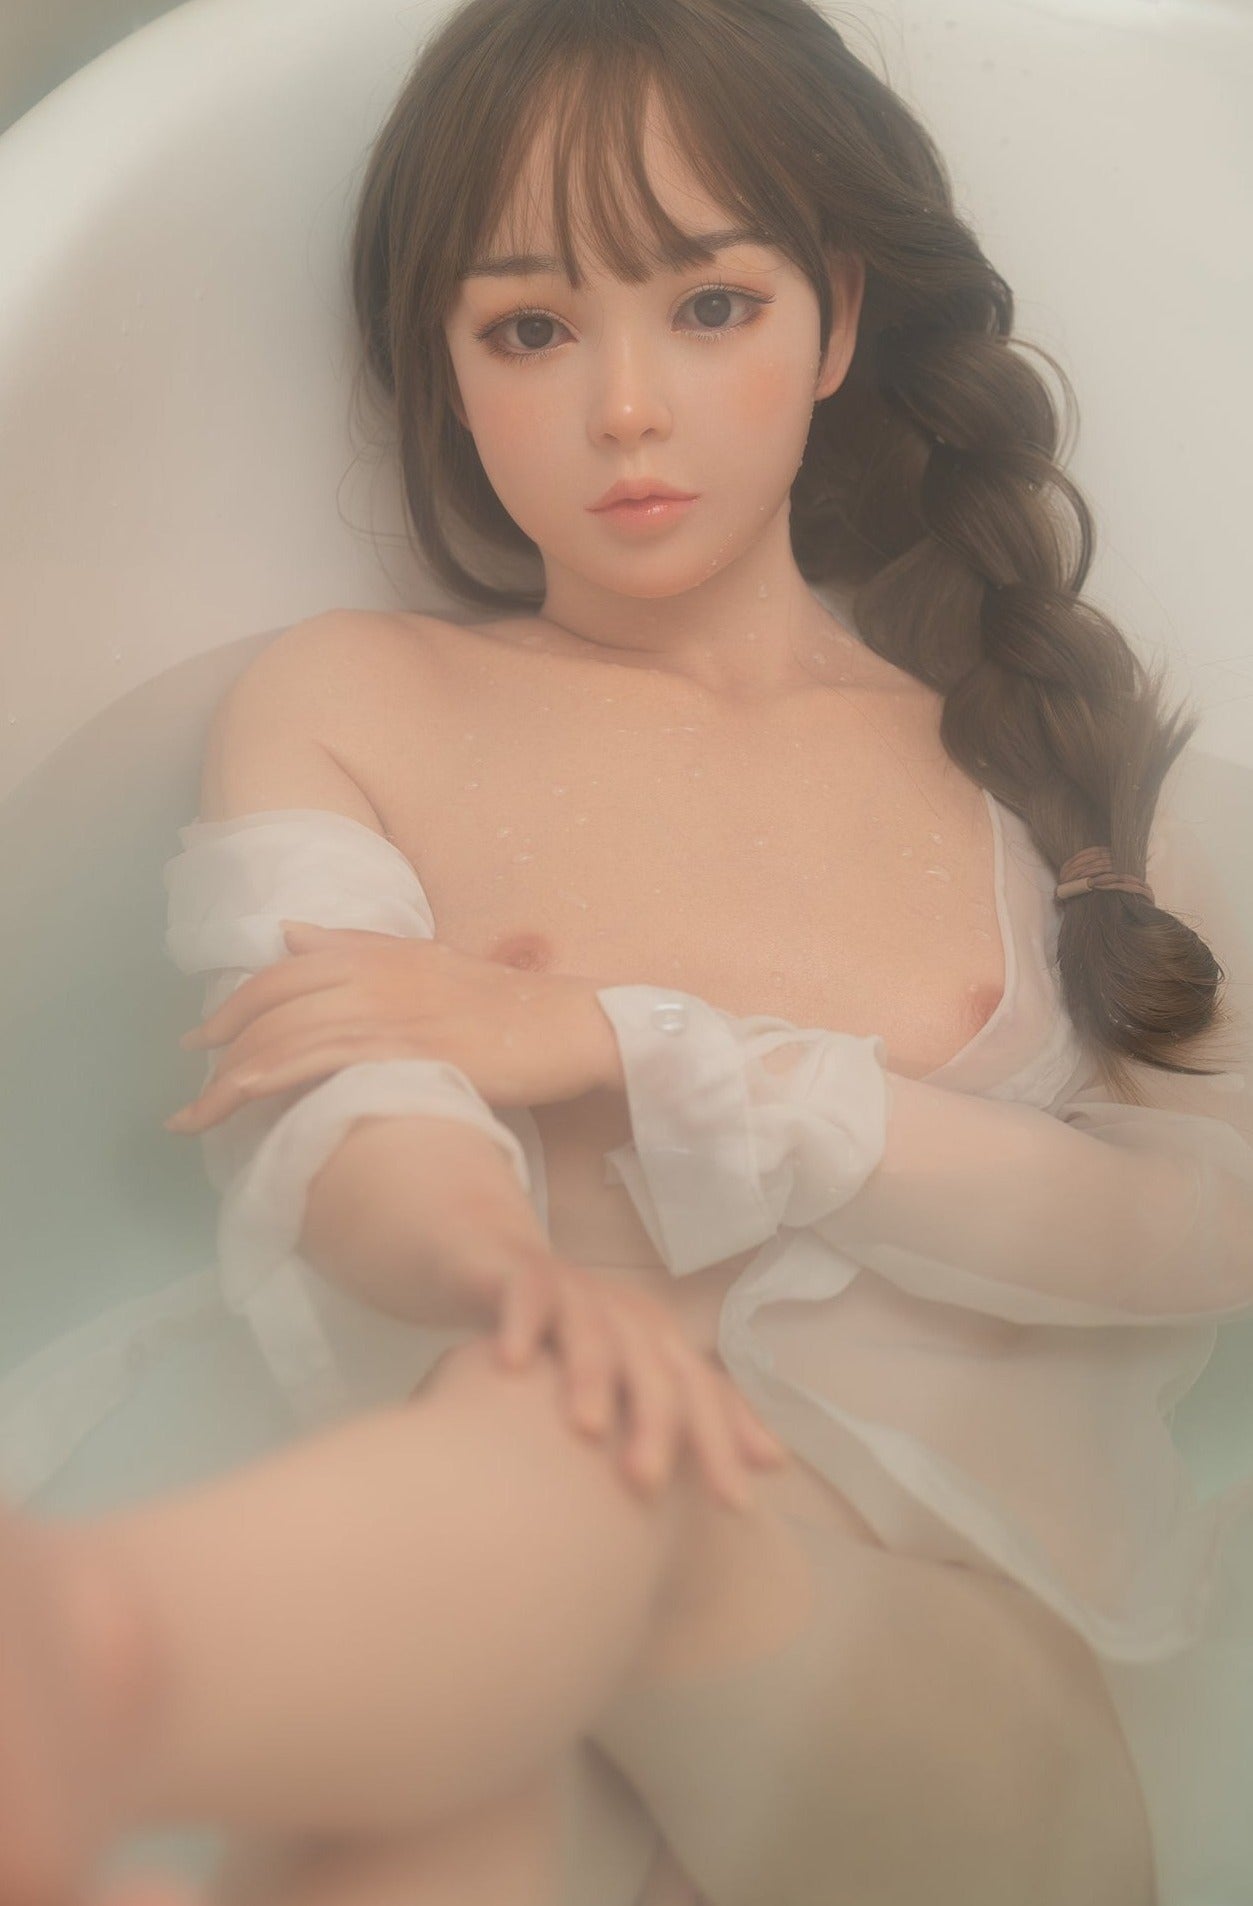 Axbdoll 148cm Beauty Series AA Cup Silicone Anime Sex Doll G06-2 - lovedollshops.com